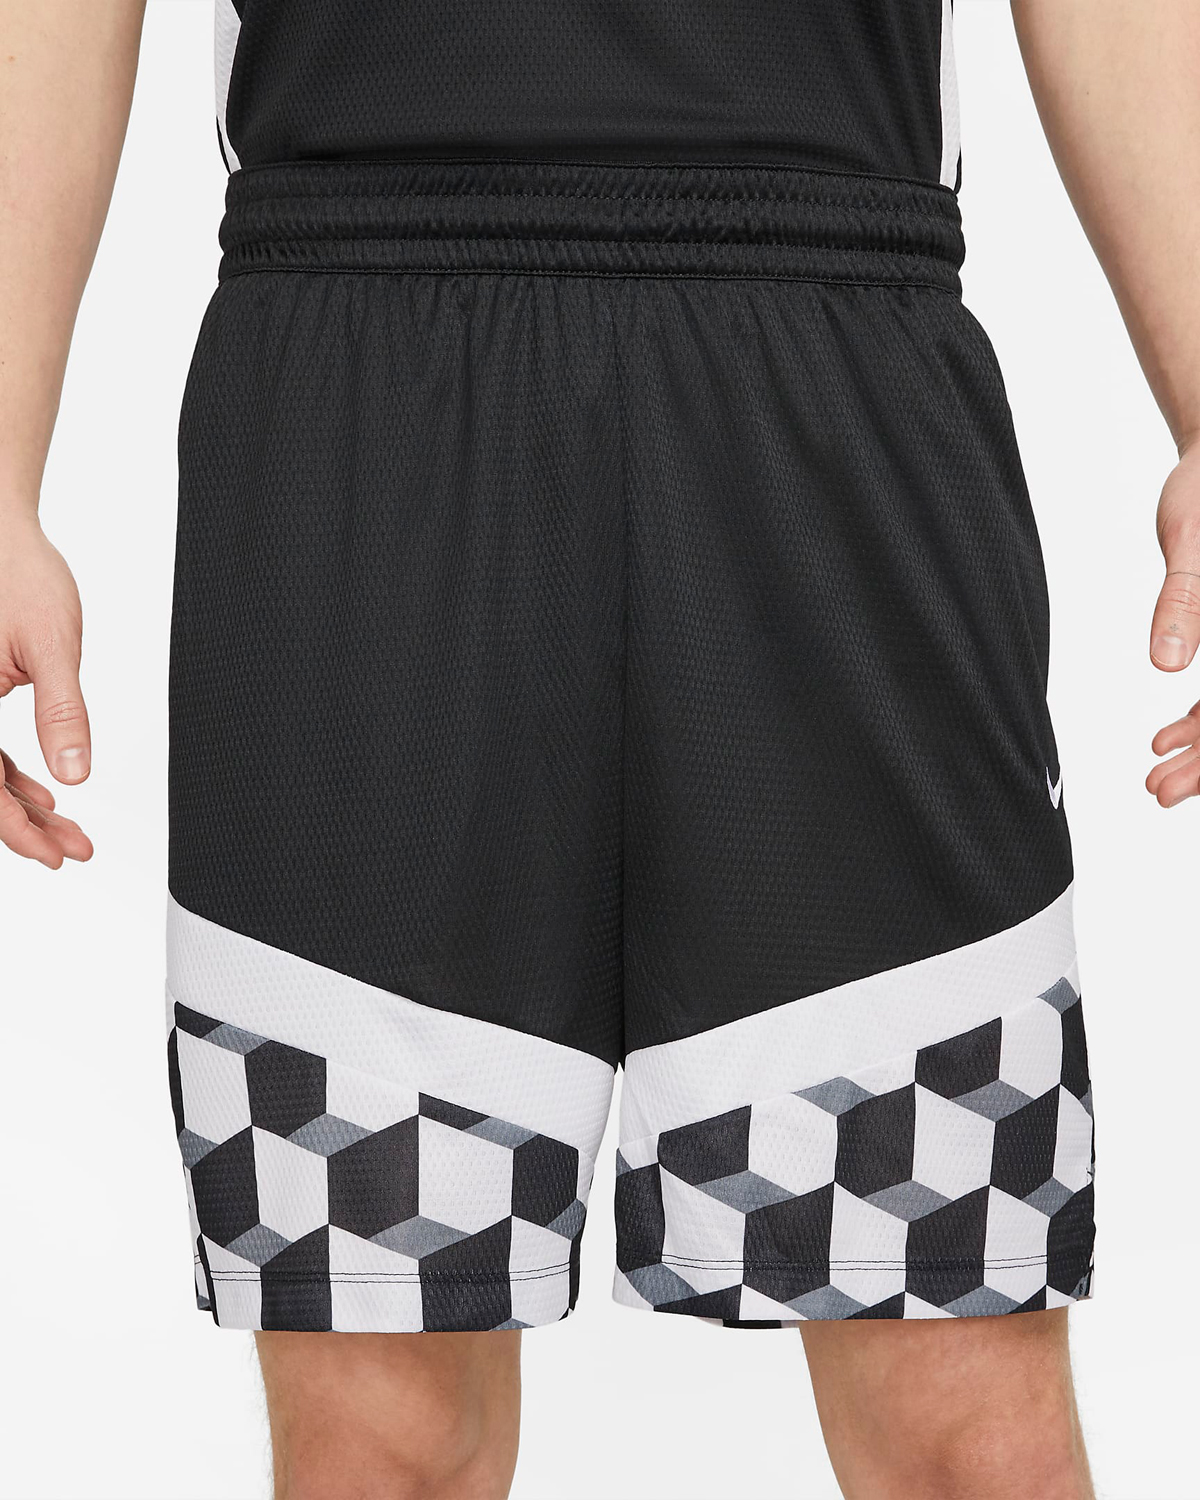 Nike-Icon-Basketball-Shorts-Black-White